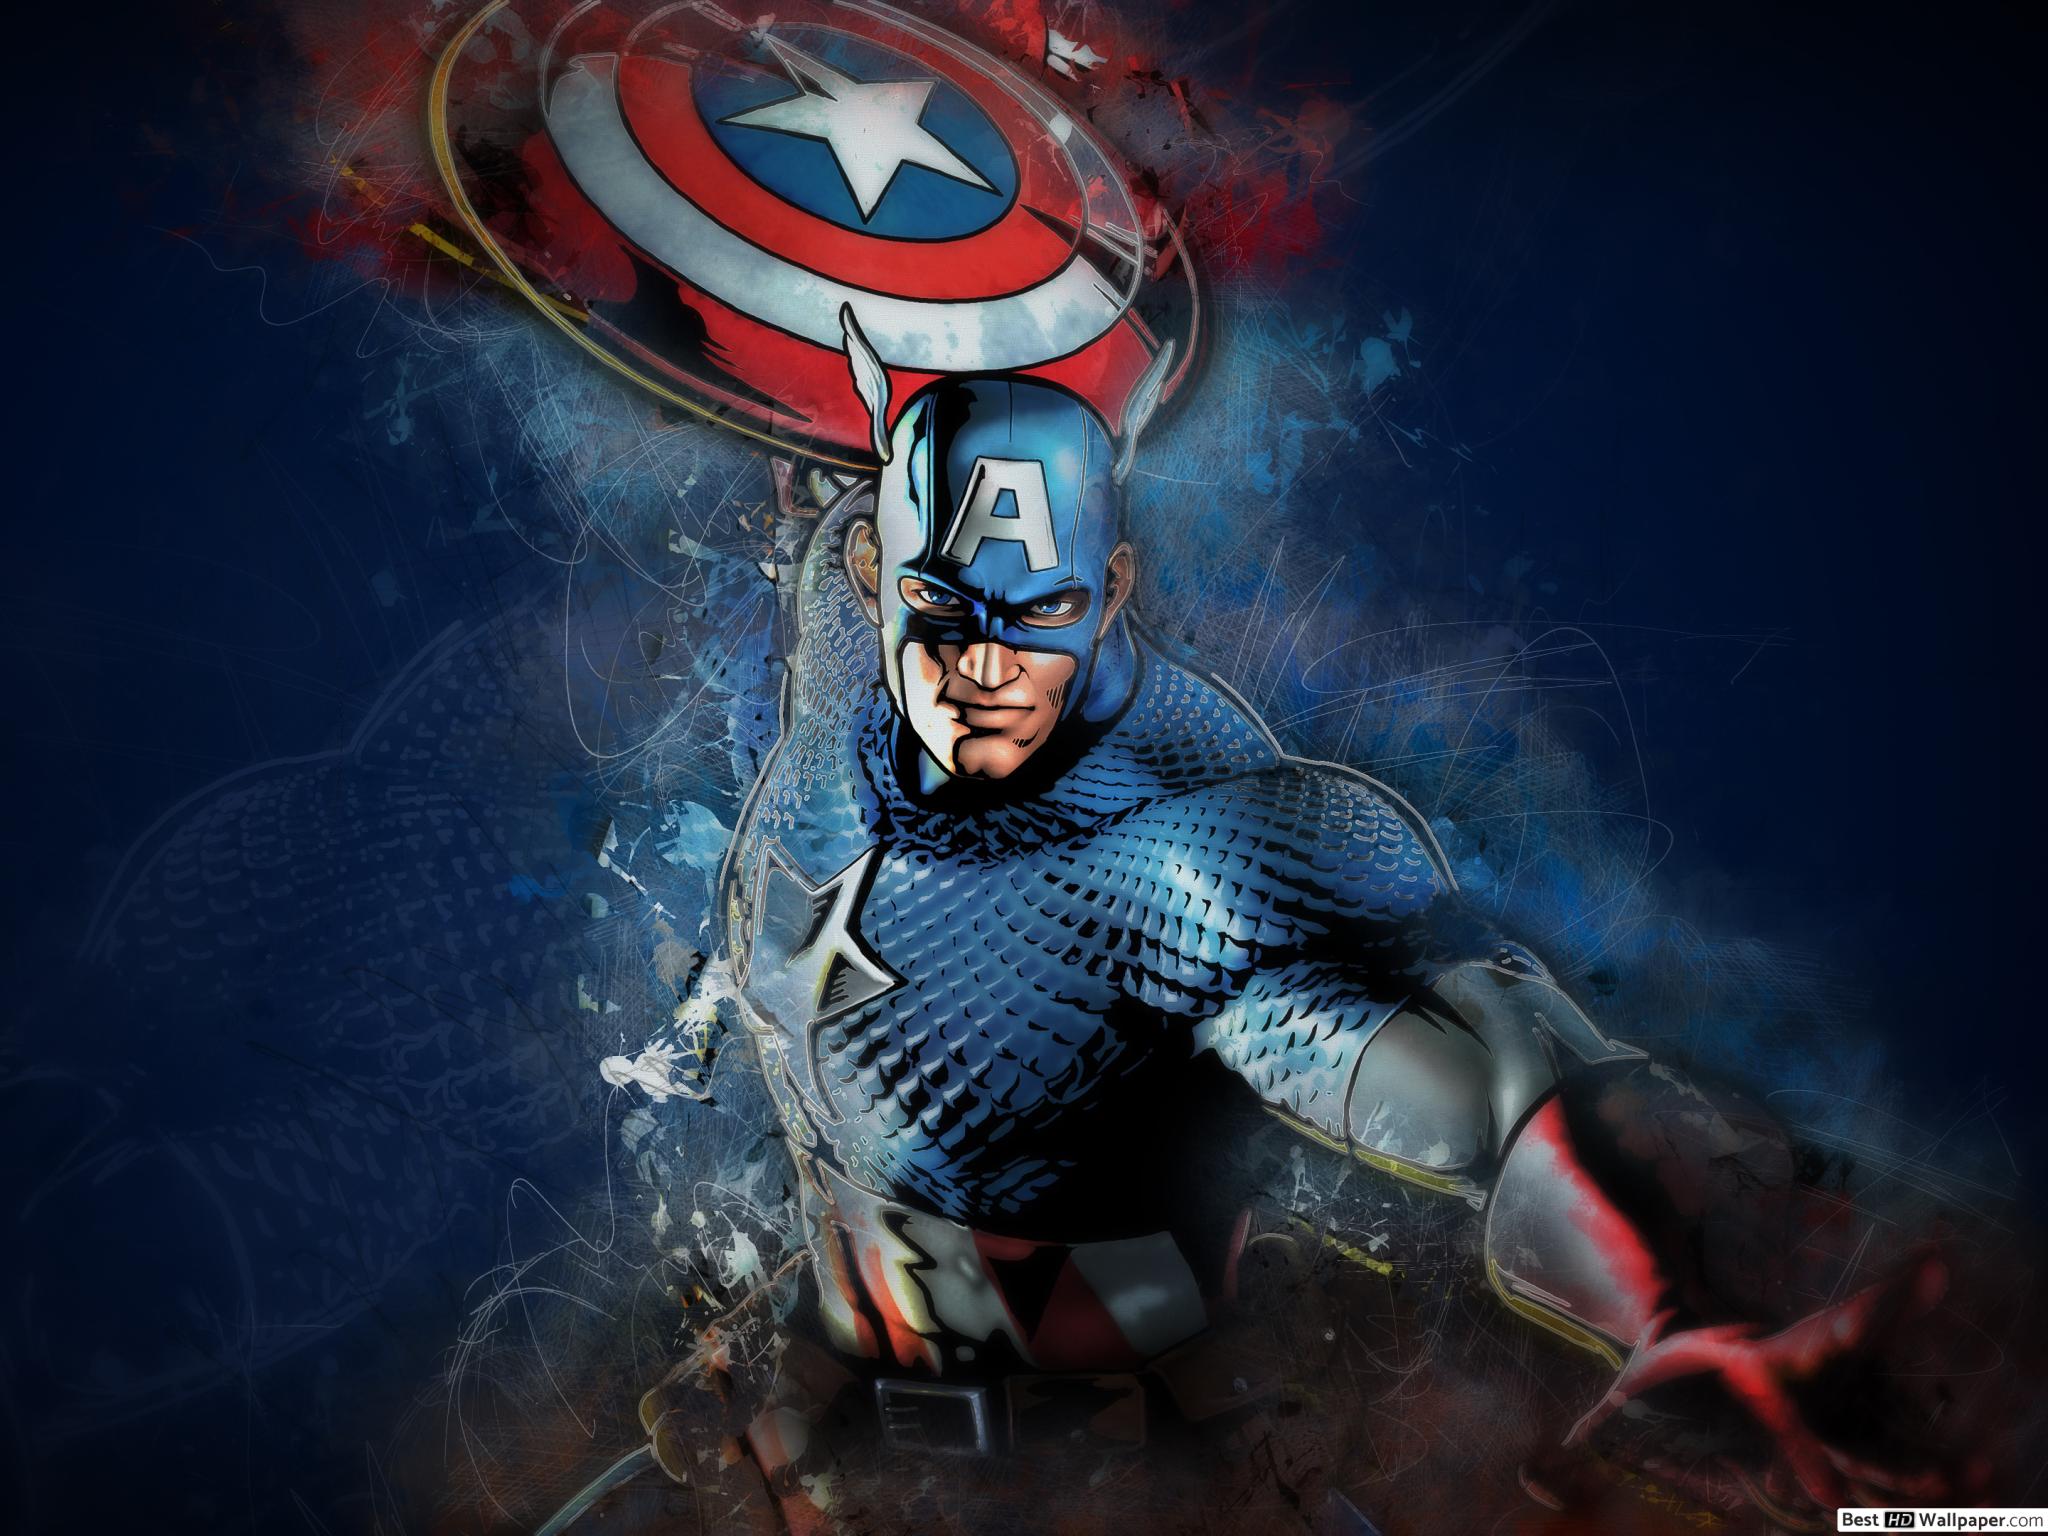 The Captain America HD wallpaper download